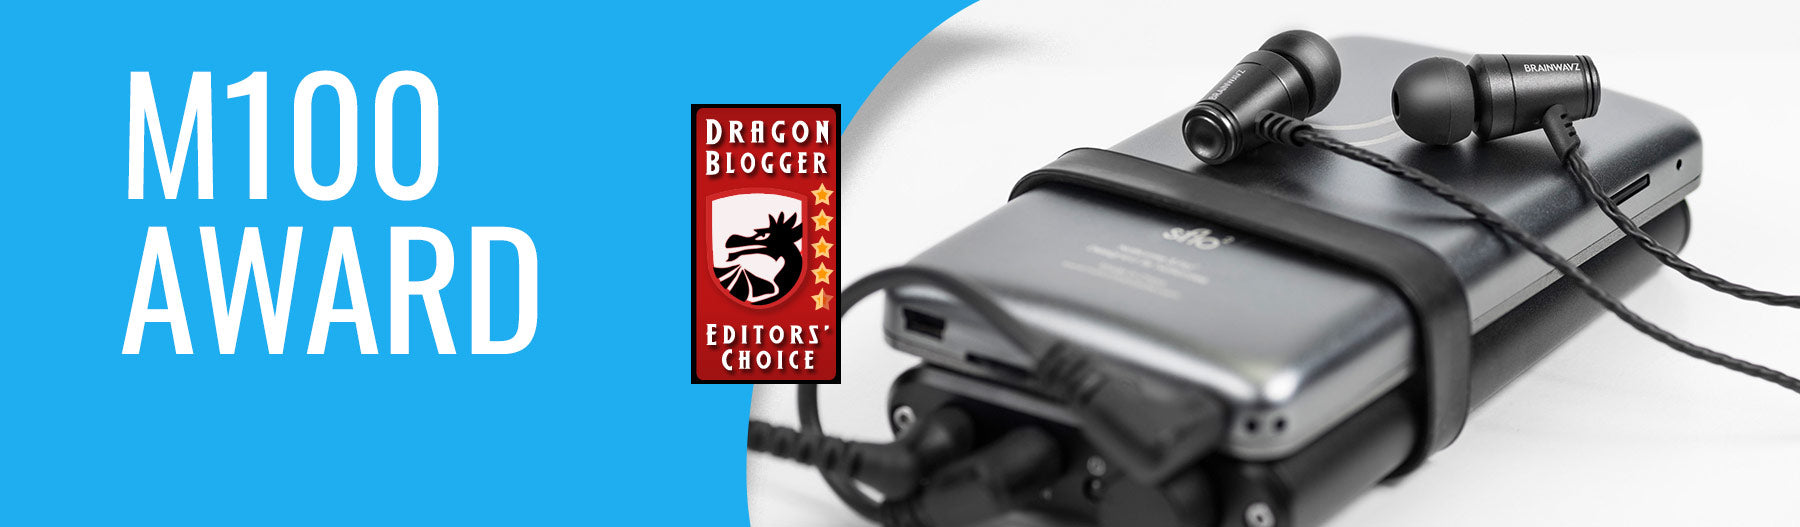 Brainwavz M100 Review by Dragon Blogger